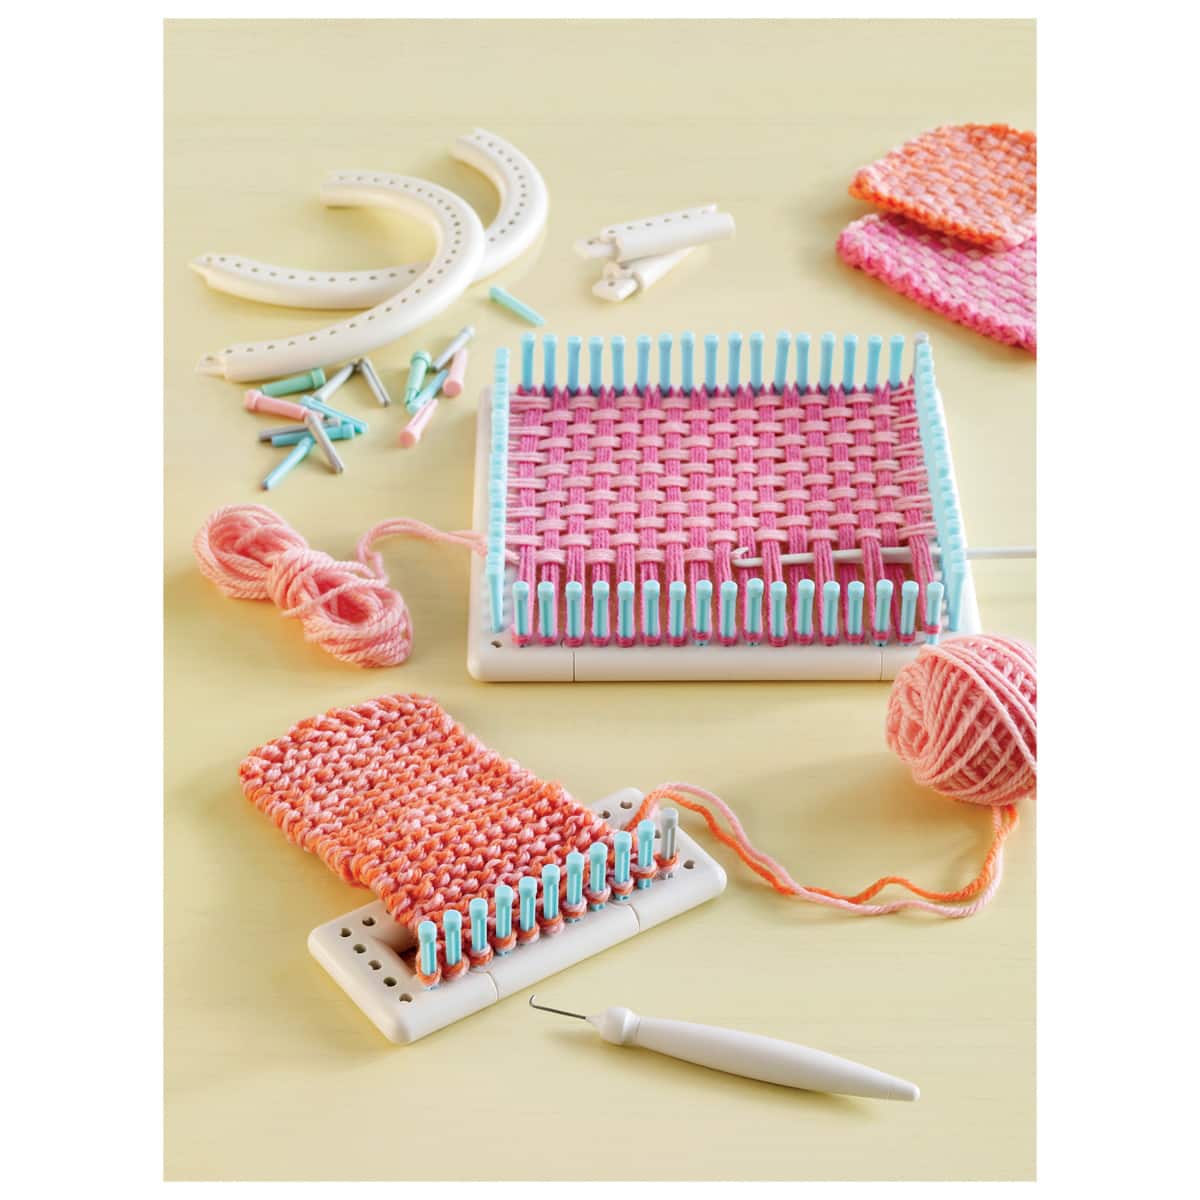 Martha Stewart Crafts Knit Weave Loom Kit